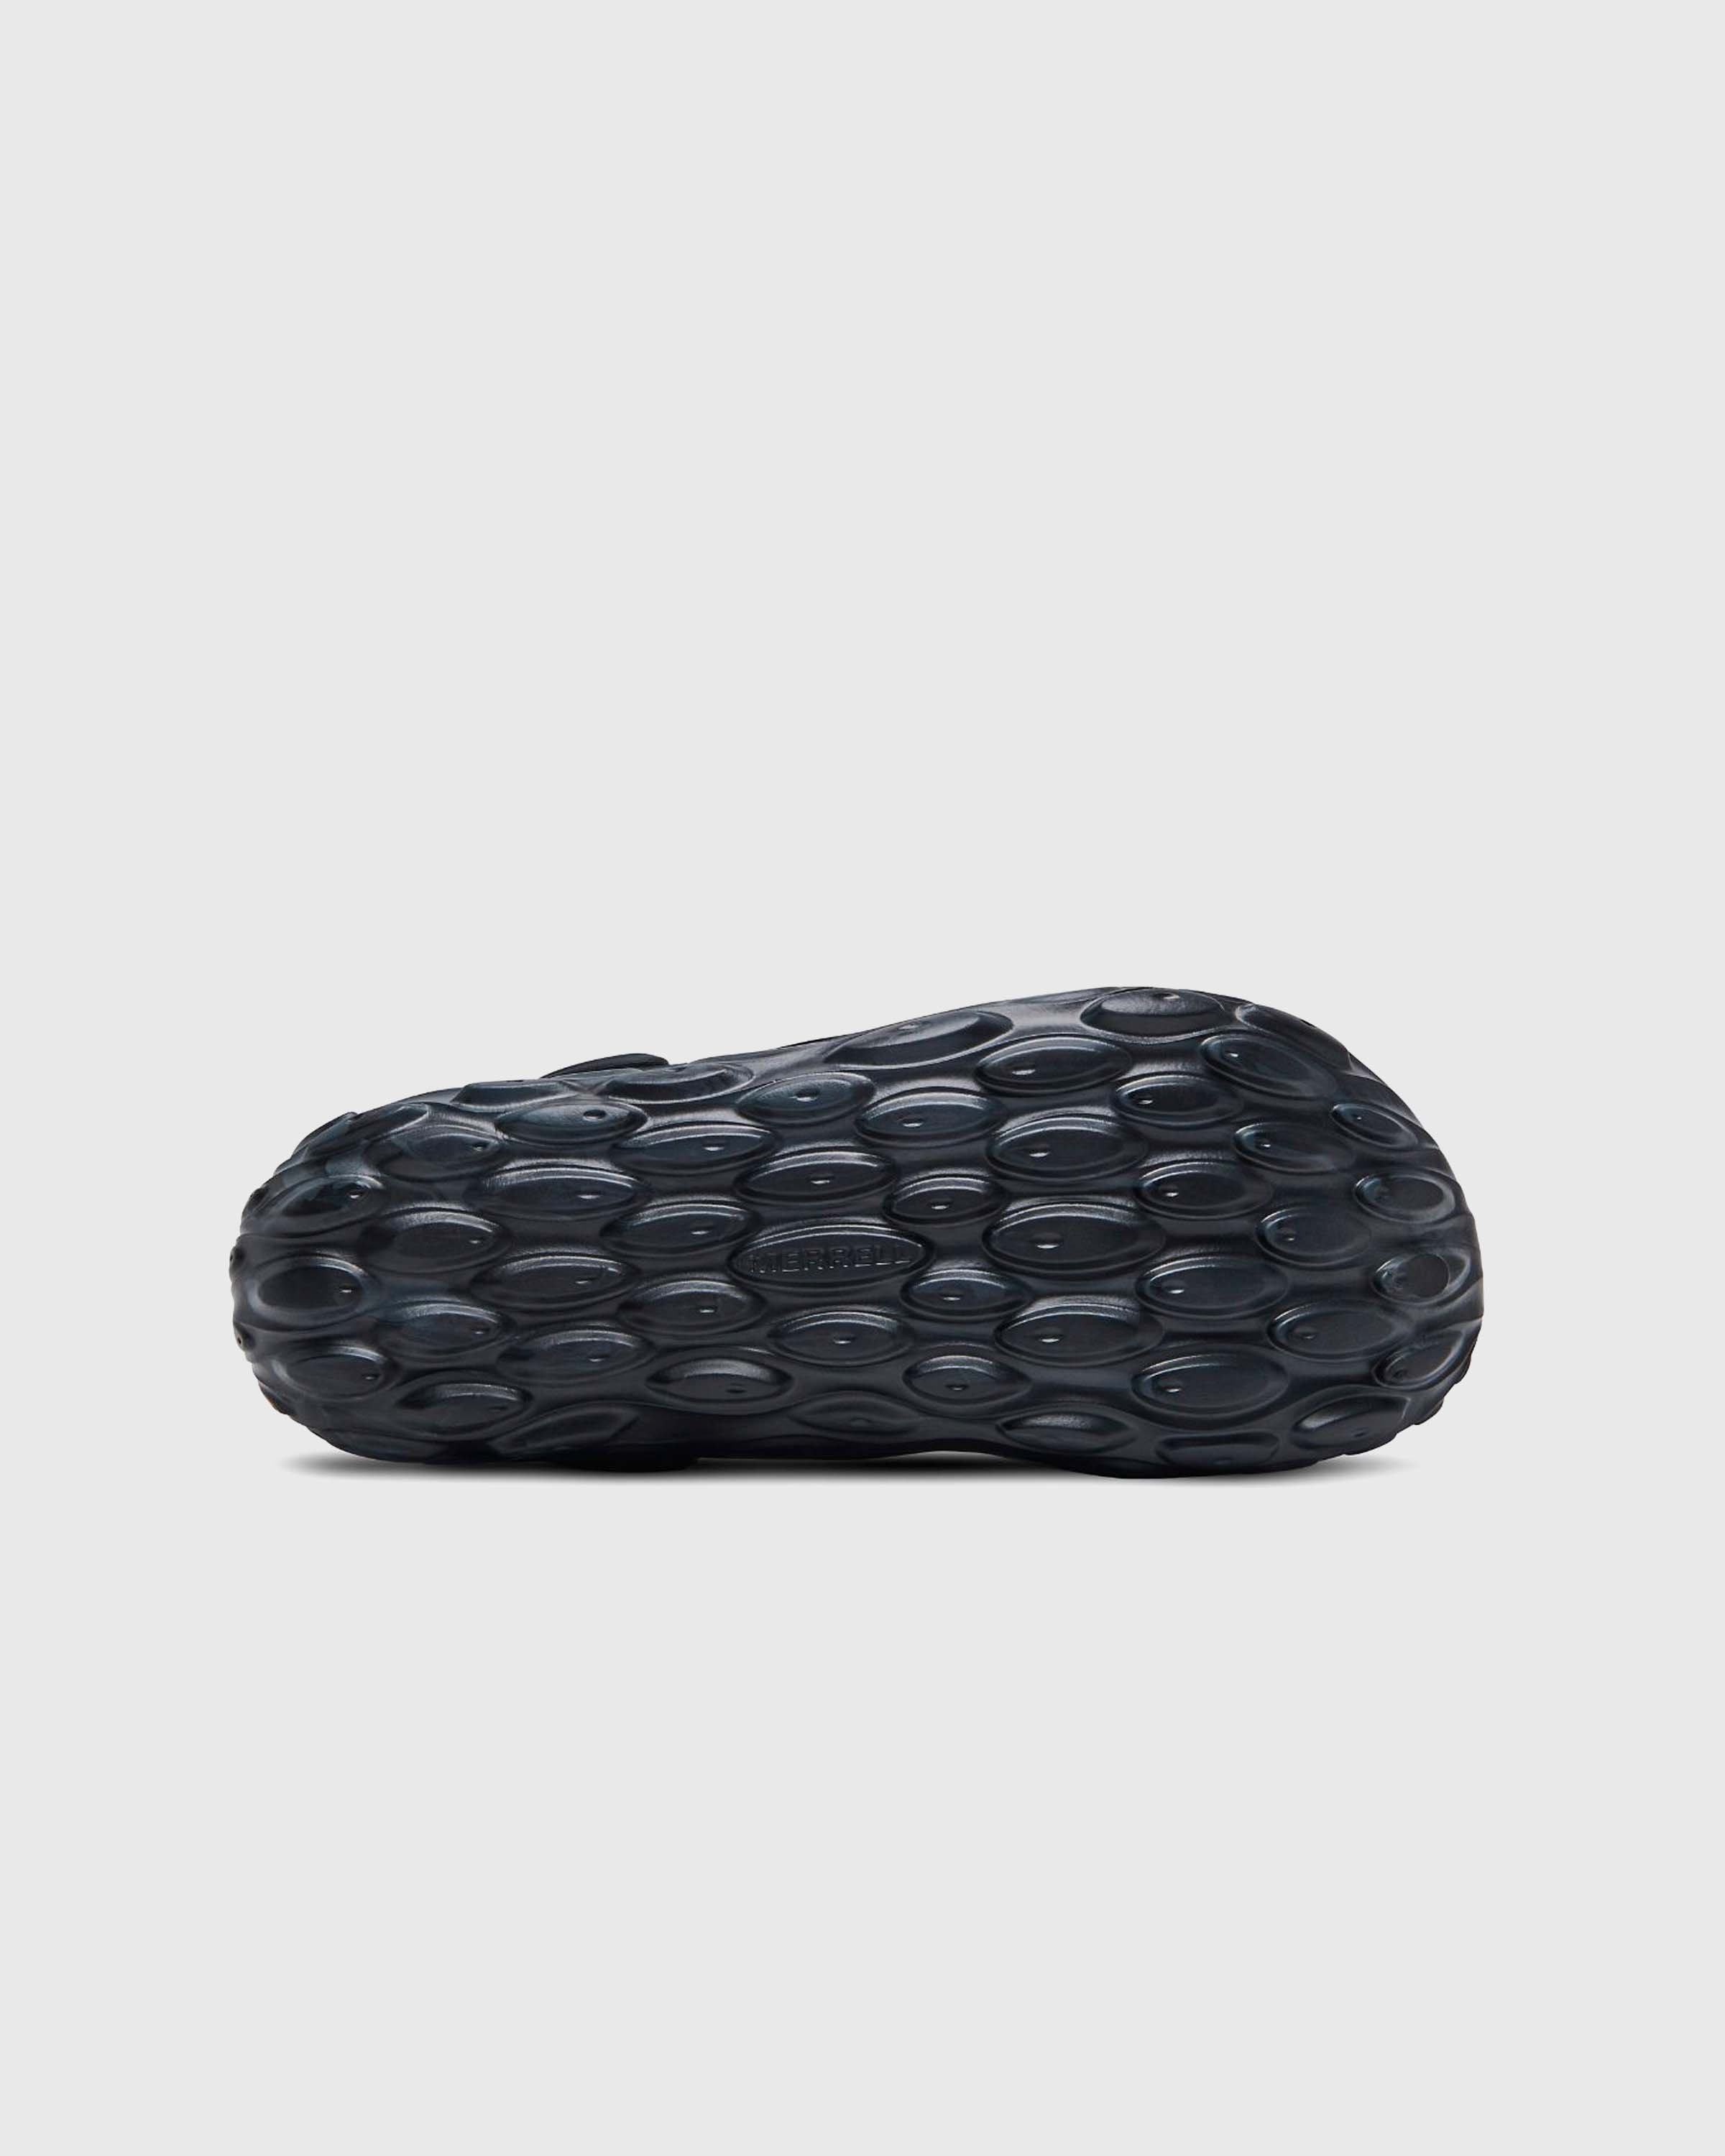 Merrell - Hydro Moc Black - Footwear - Black - Image 4